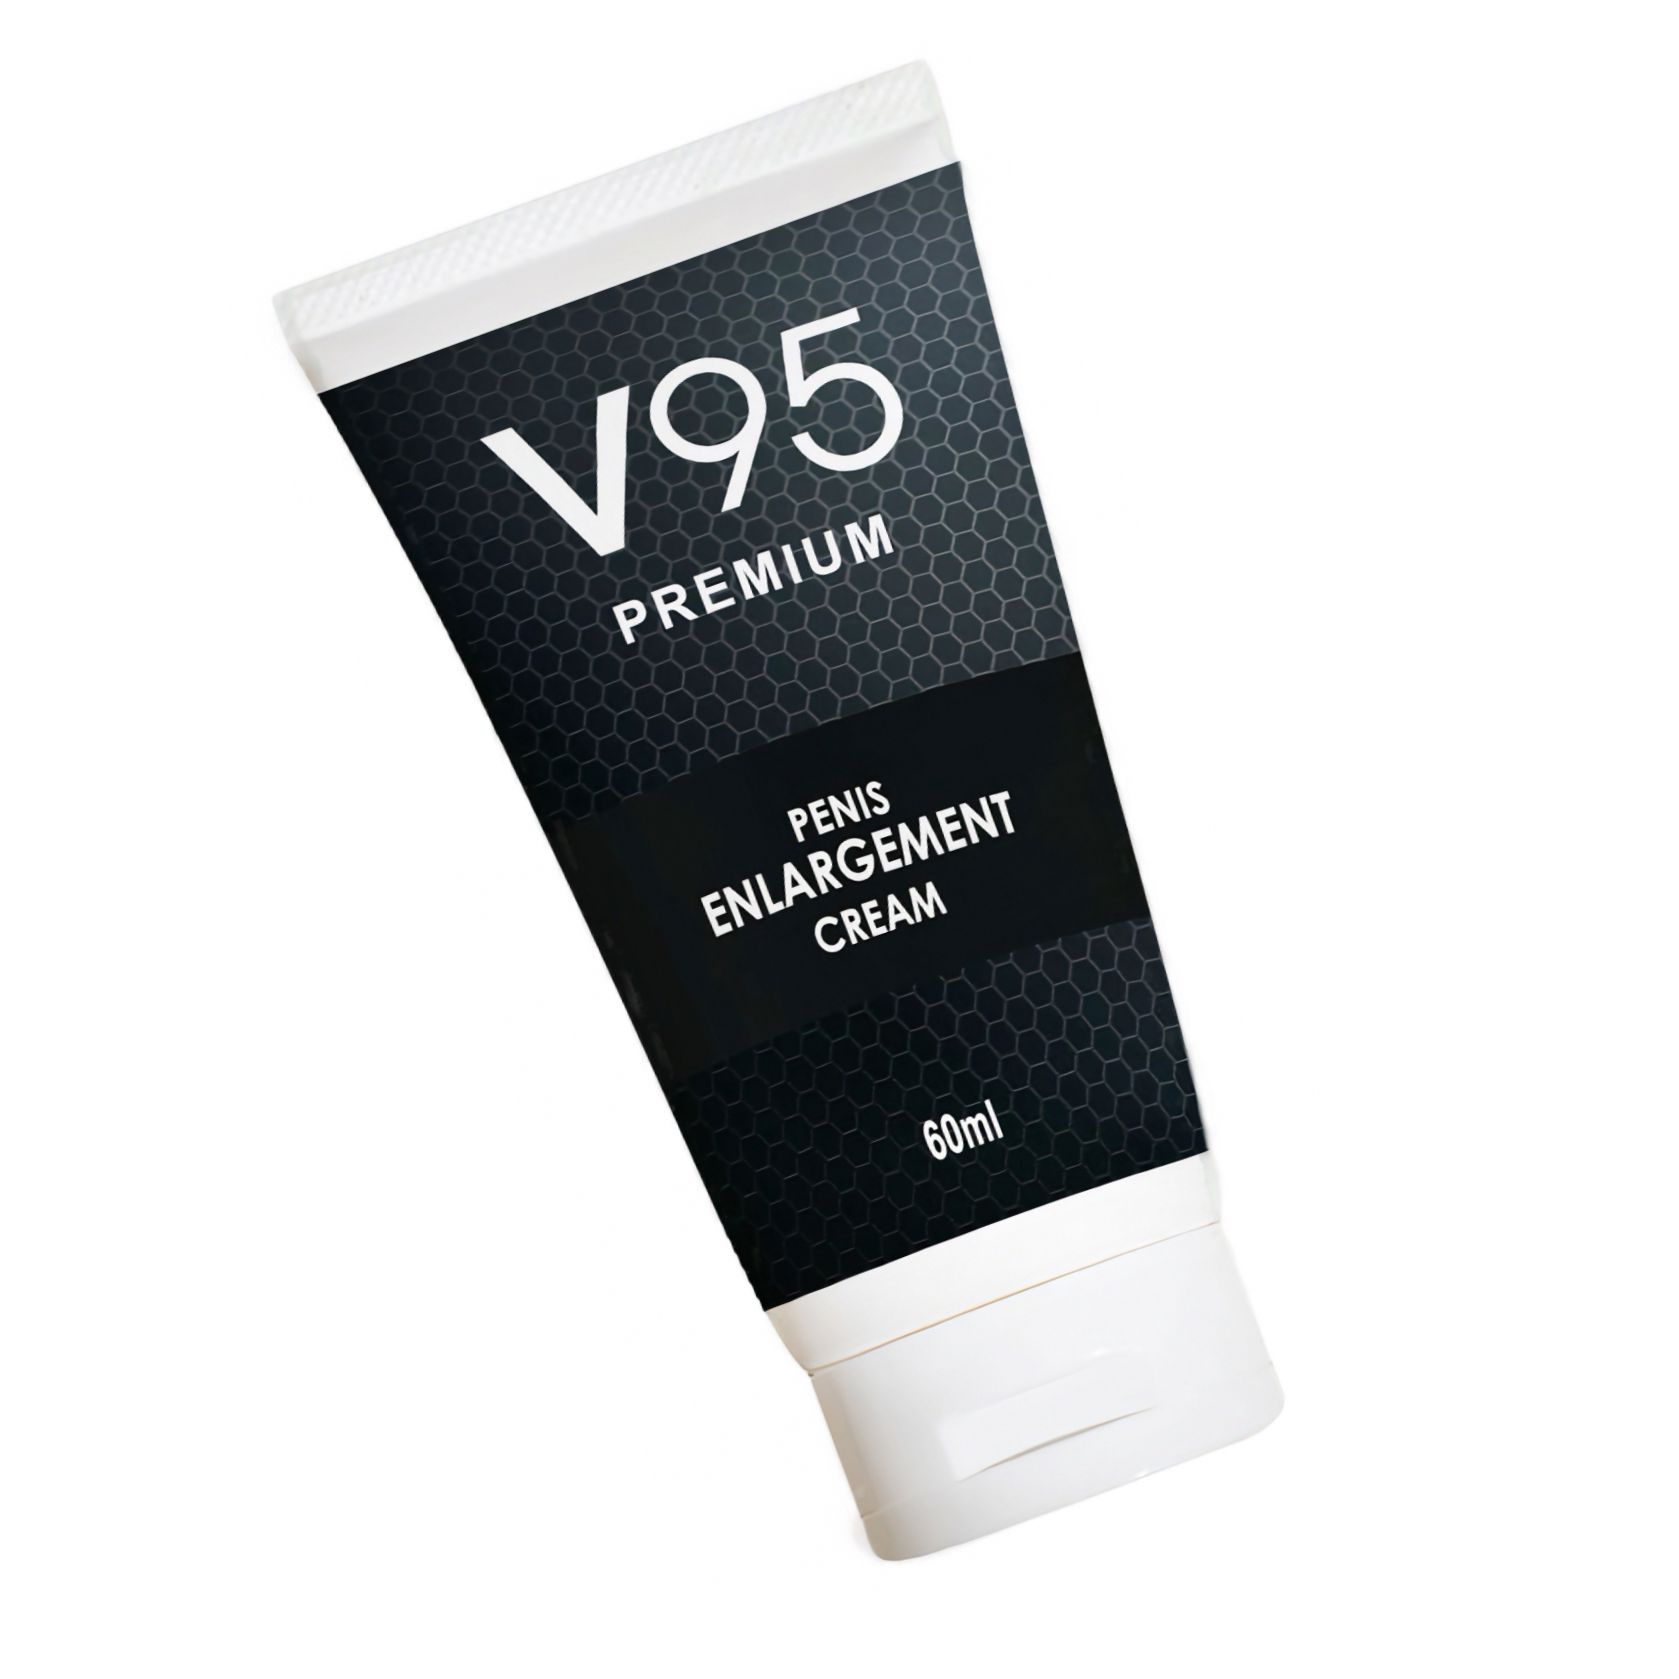 Crema V95 Premium